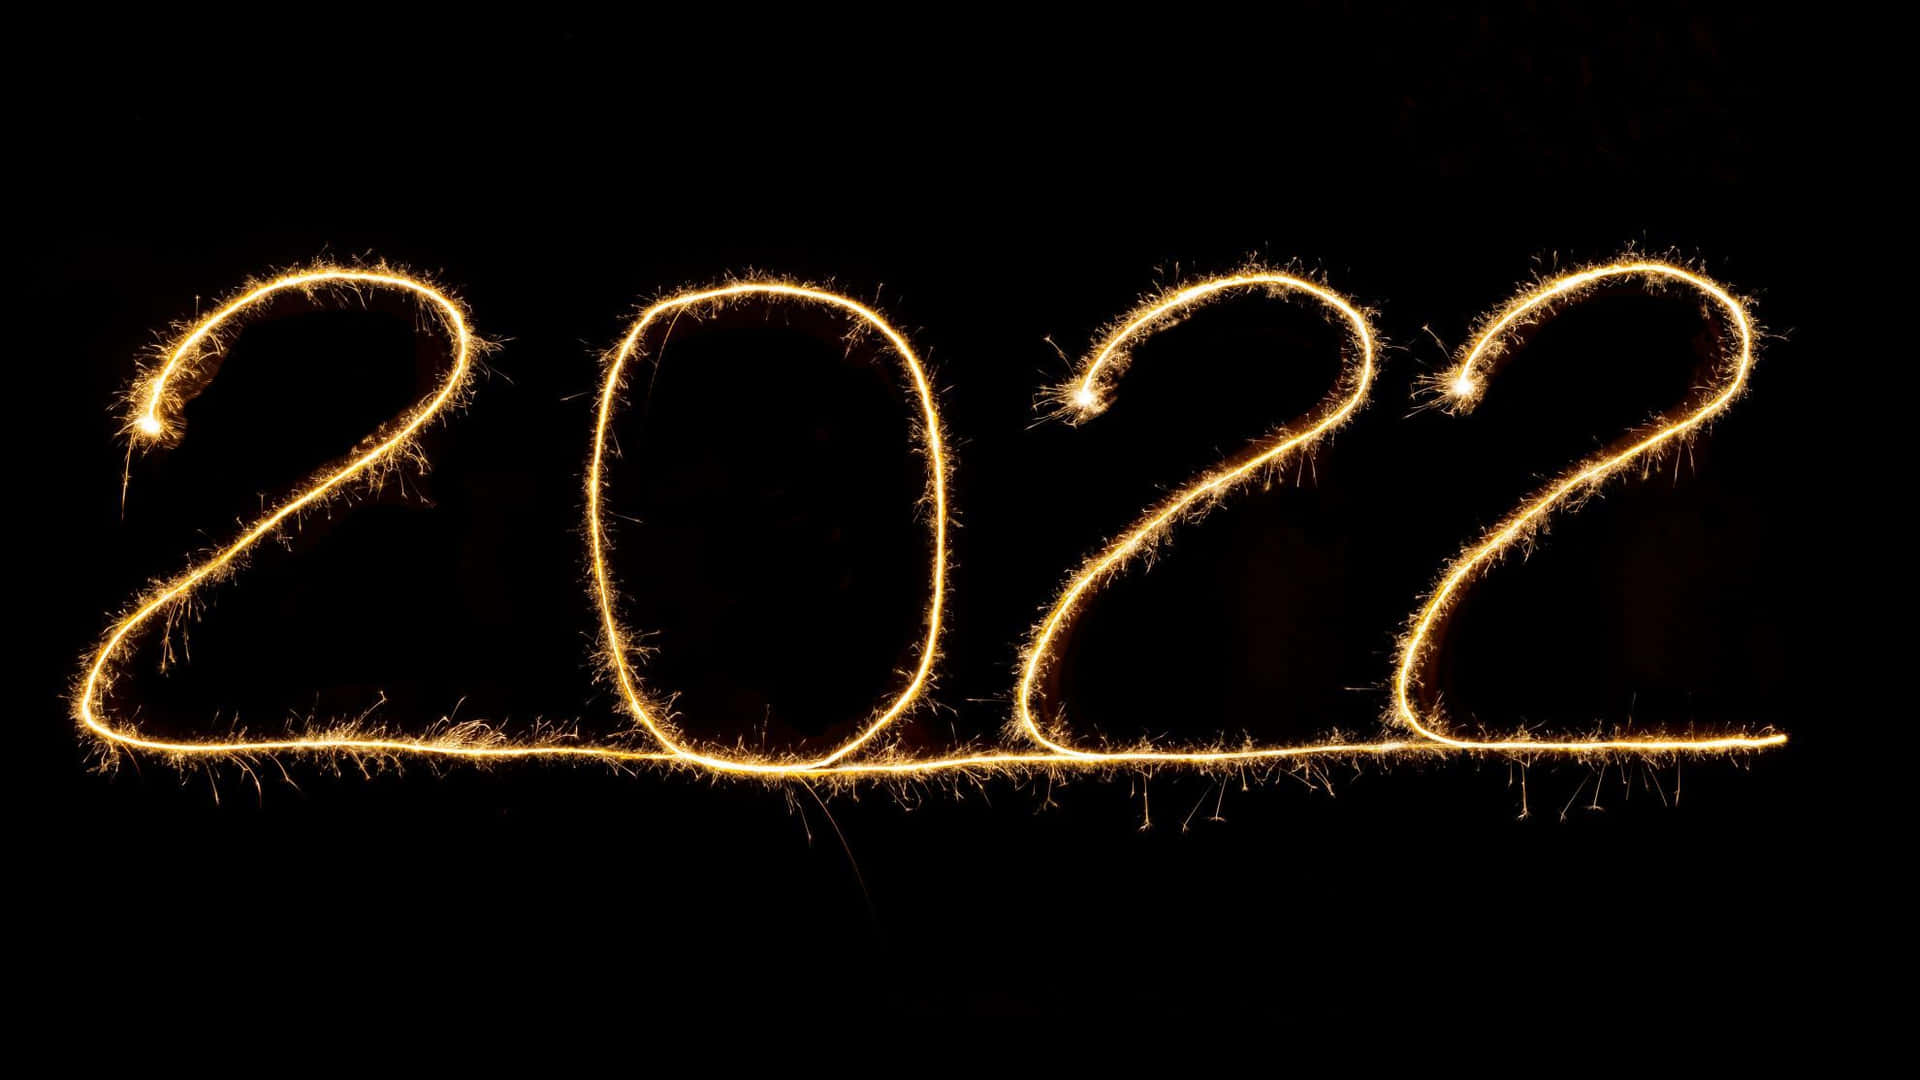 Celebrating 2022: An Elegant Display of Fireworks Illuminating the Night Sky